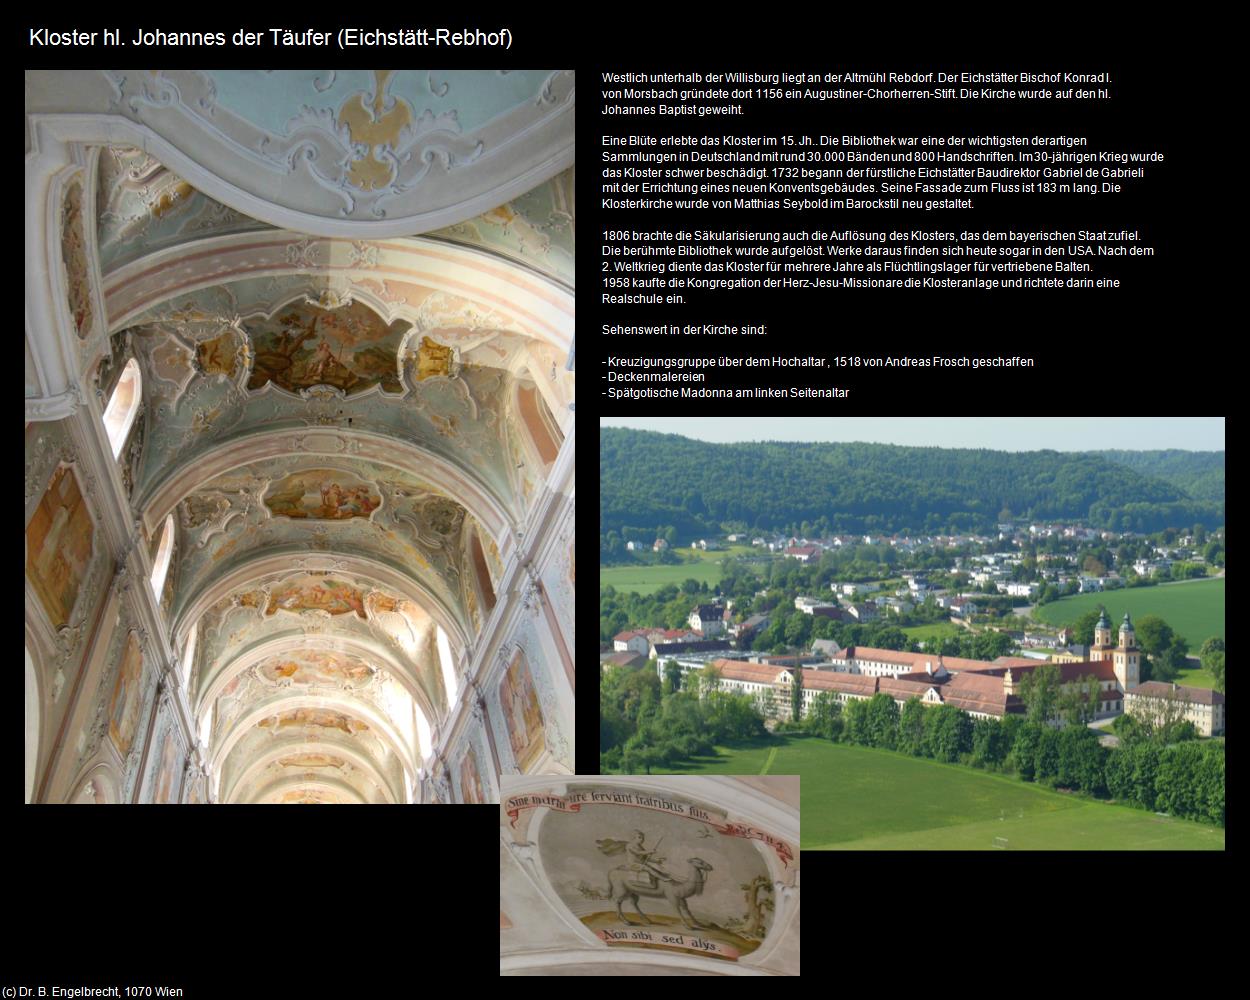 Kloster hl. Johannes der Täufer (Rebhof) (Eichstätt) in Kulturatlas-BAYERN